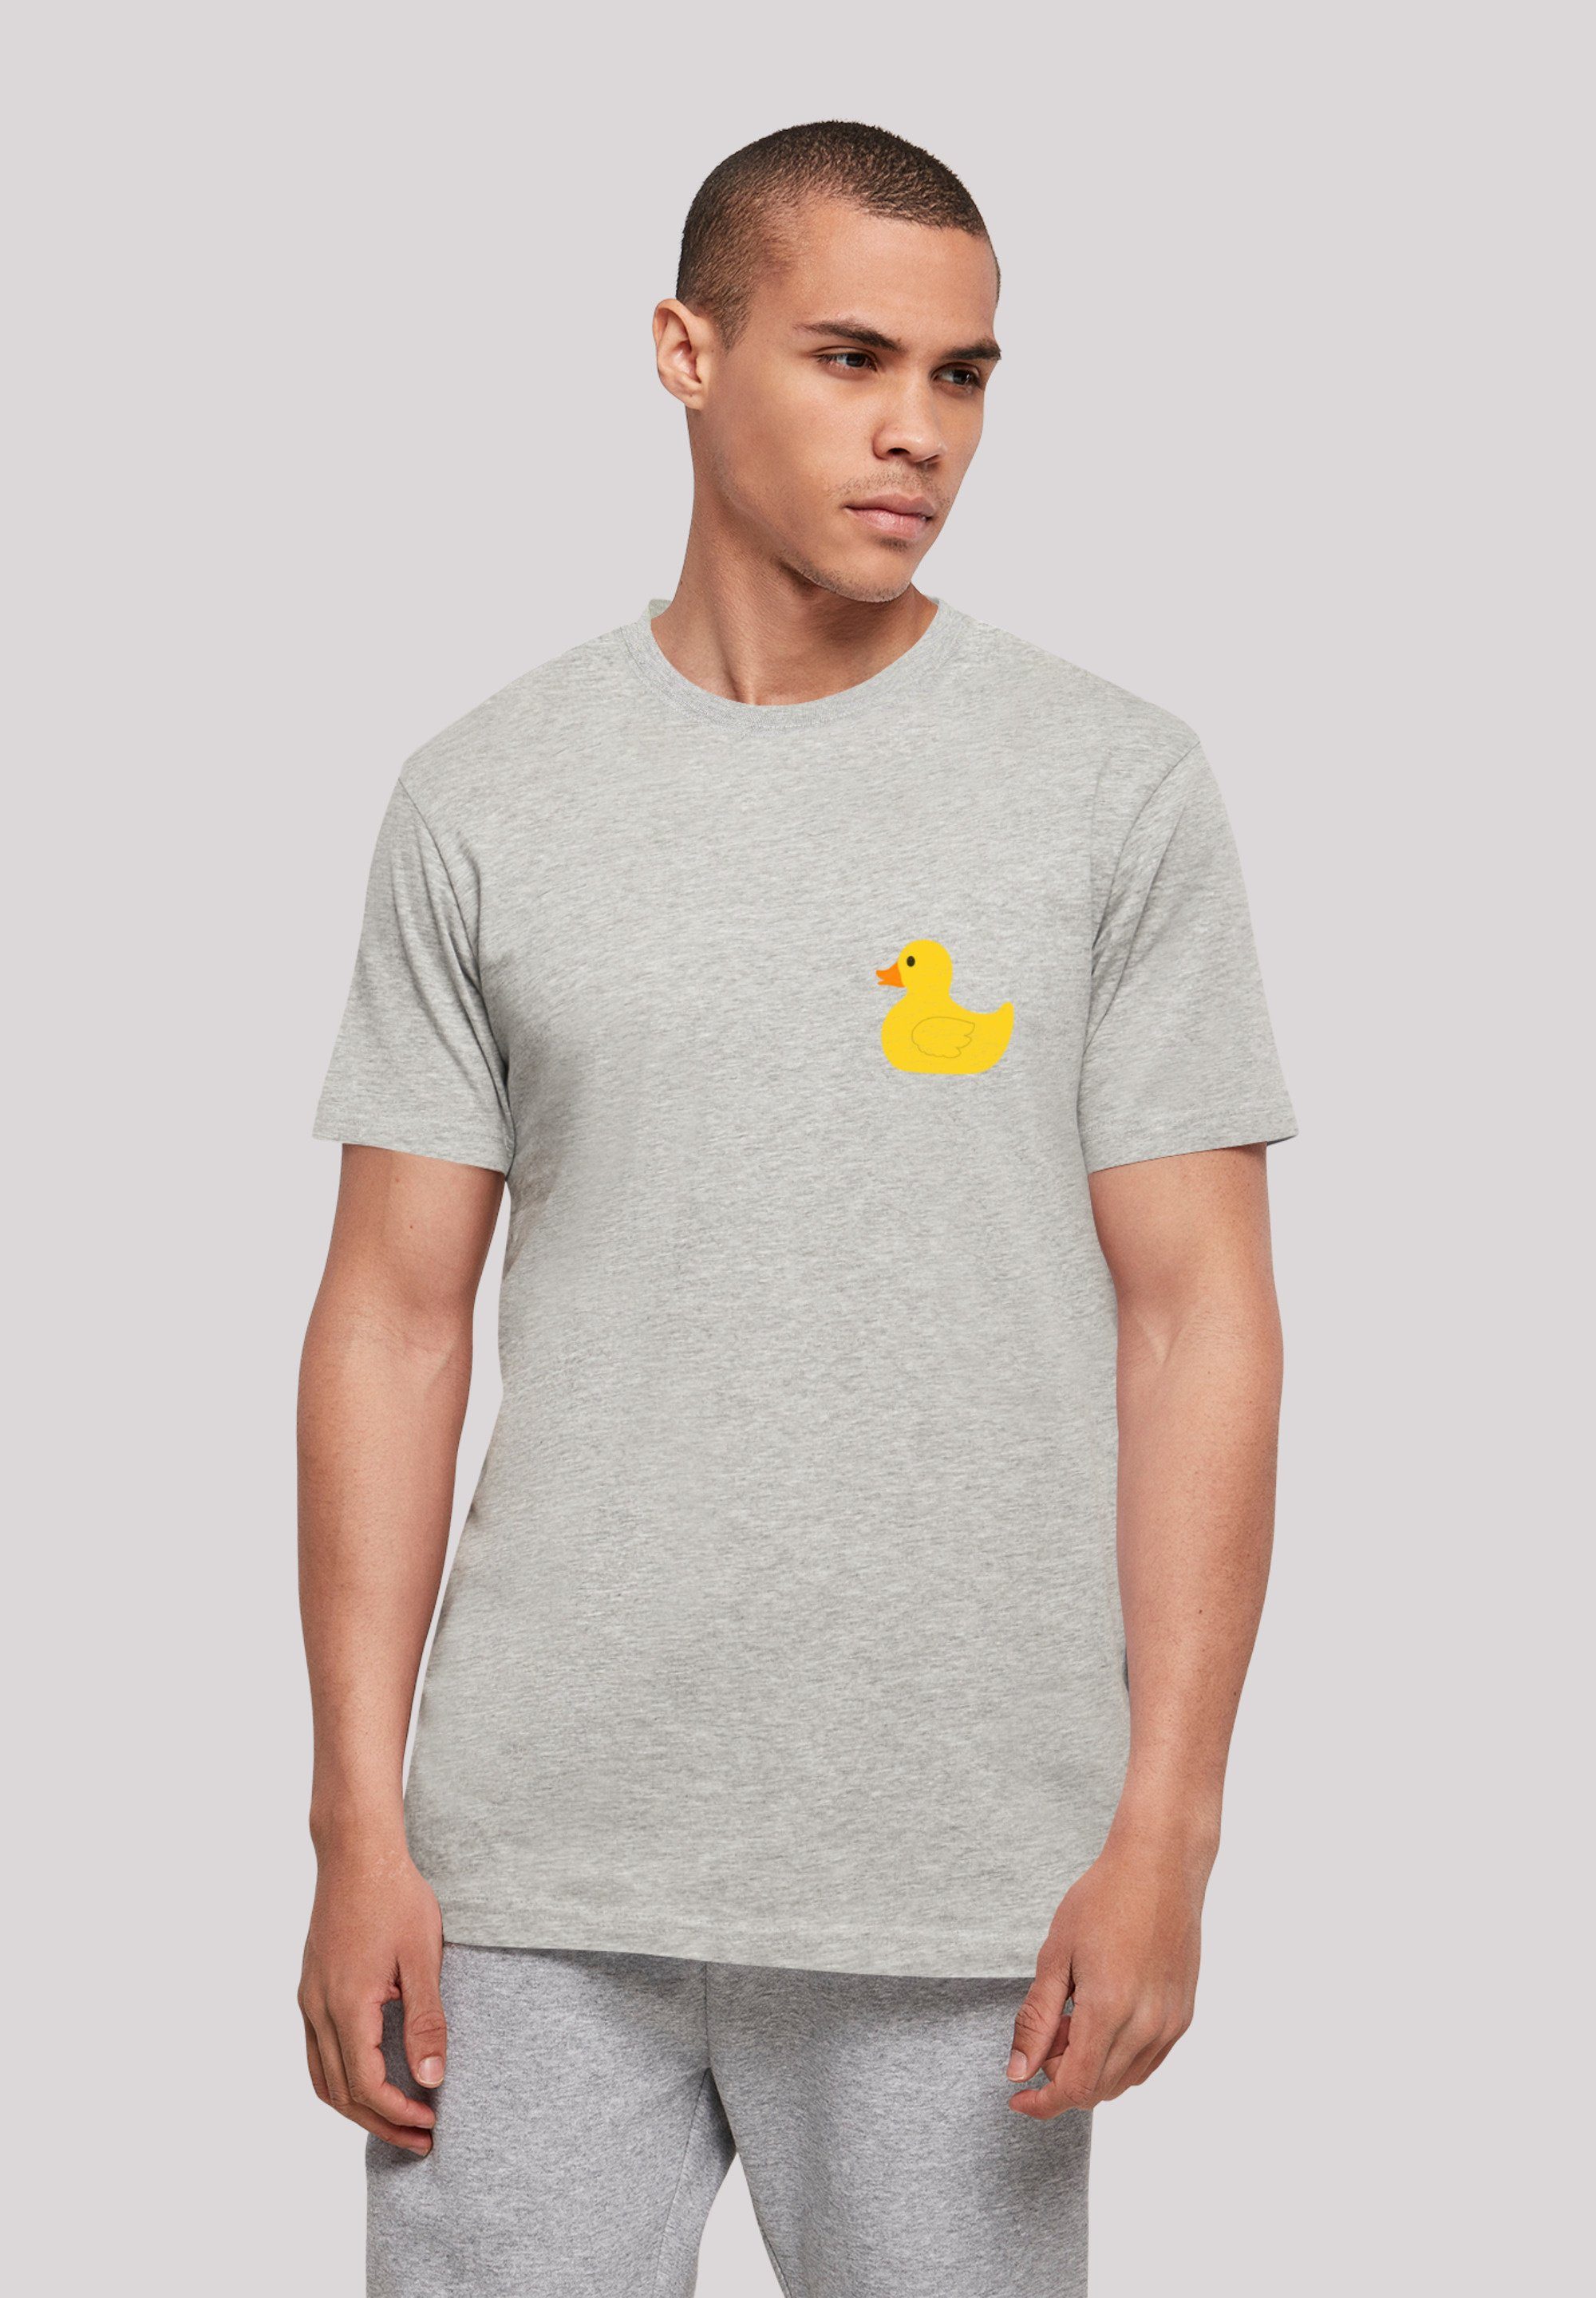 F4NT4STIC T-Shirt Yellow Rubber Duck TEE UNISEX Print heather grey